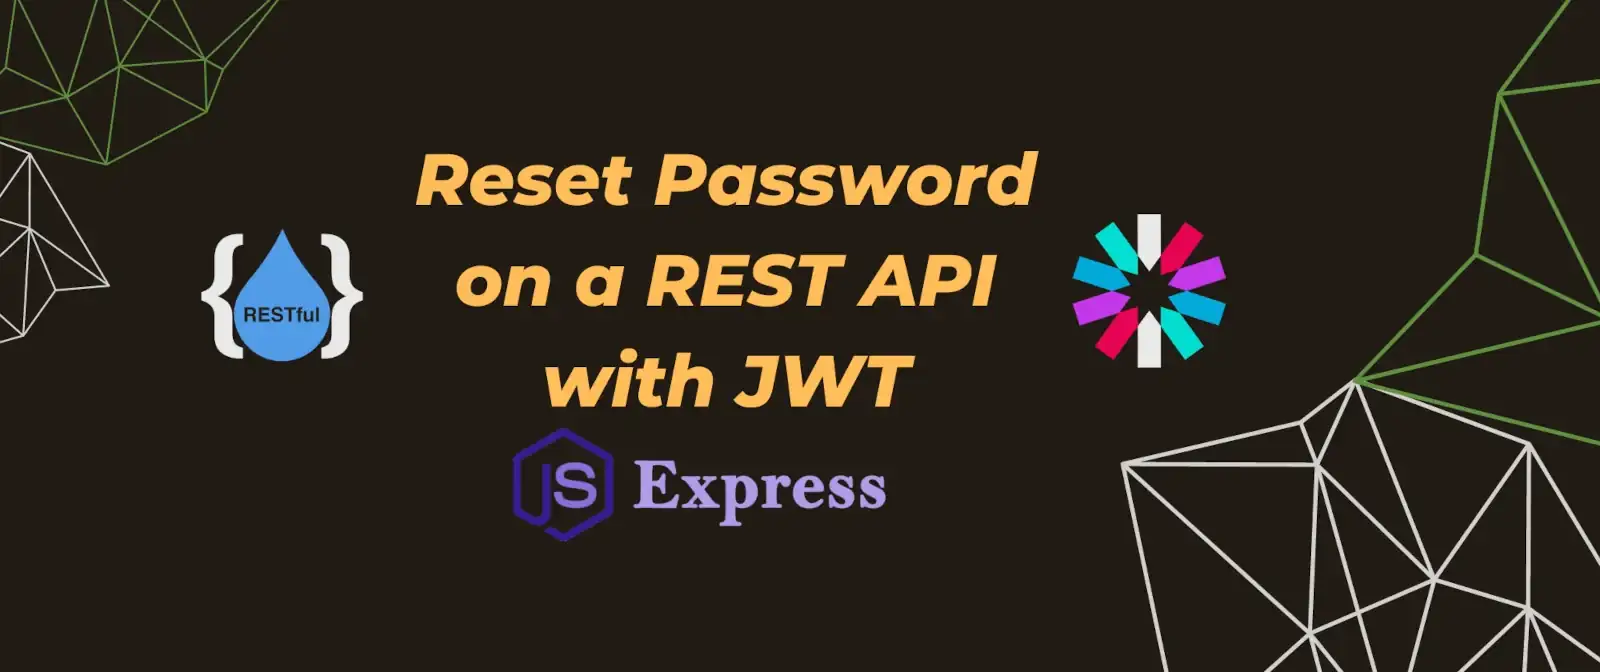 /password-reset-with-jwt/images/featuredImage.webp